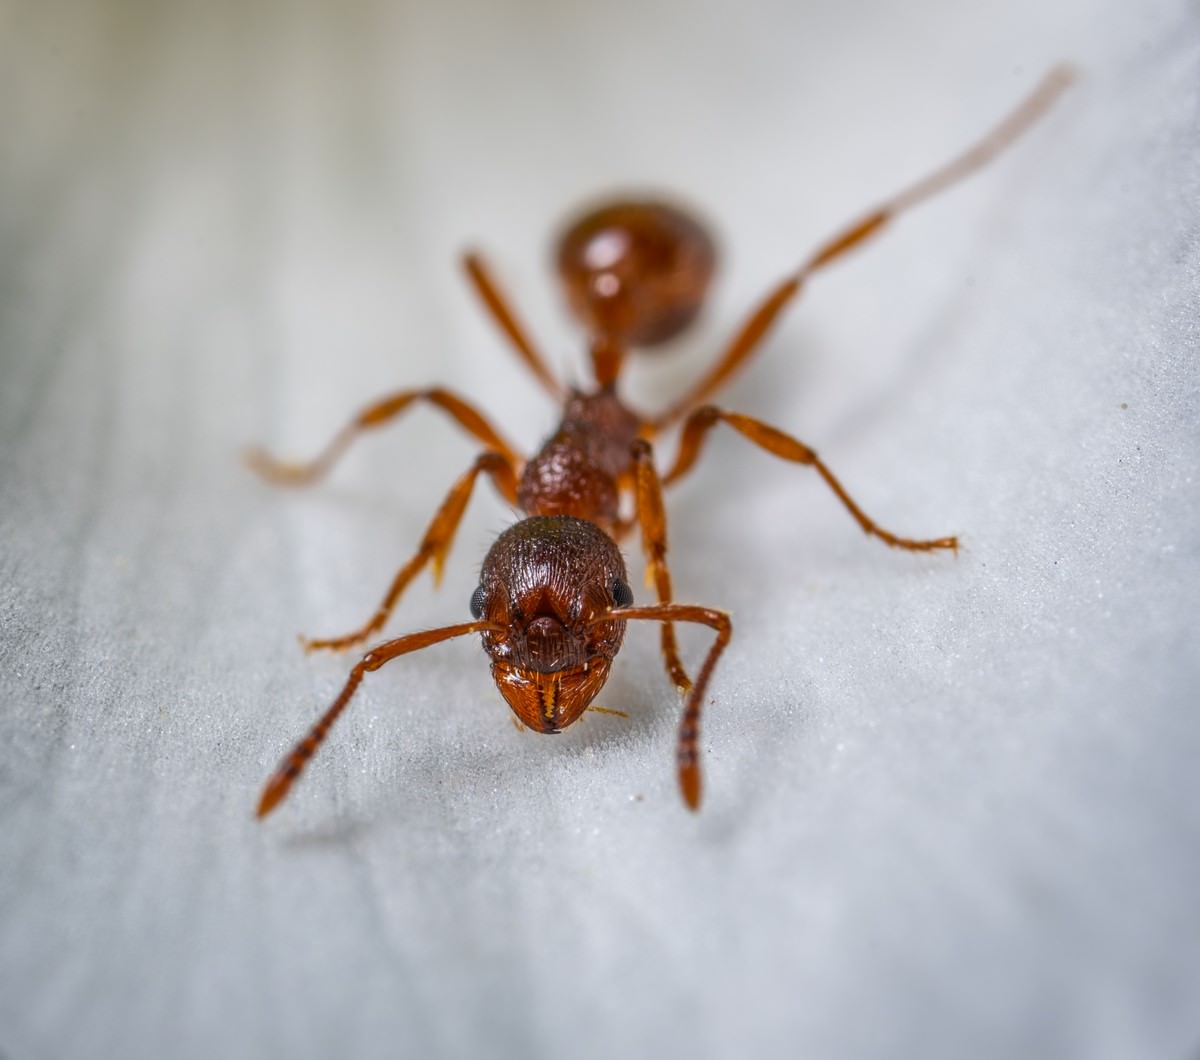 Imagem meramente ilustrativa de formiga. Foto: Egor Kamelev no Pexels.